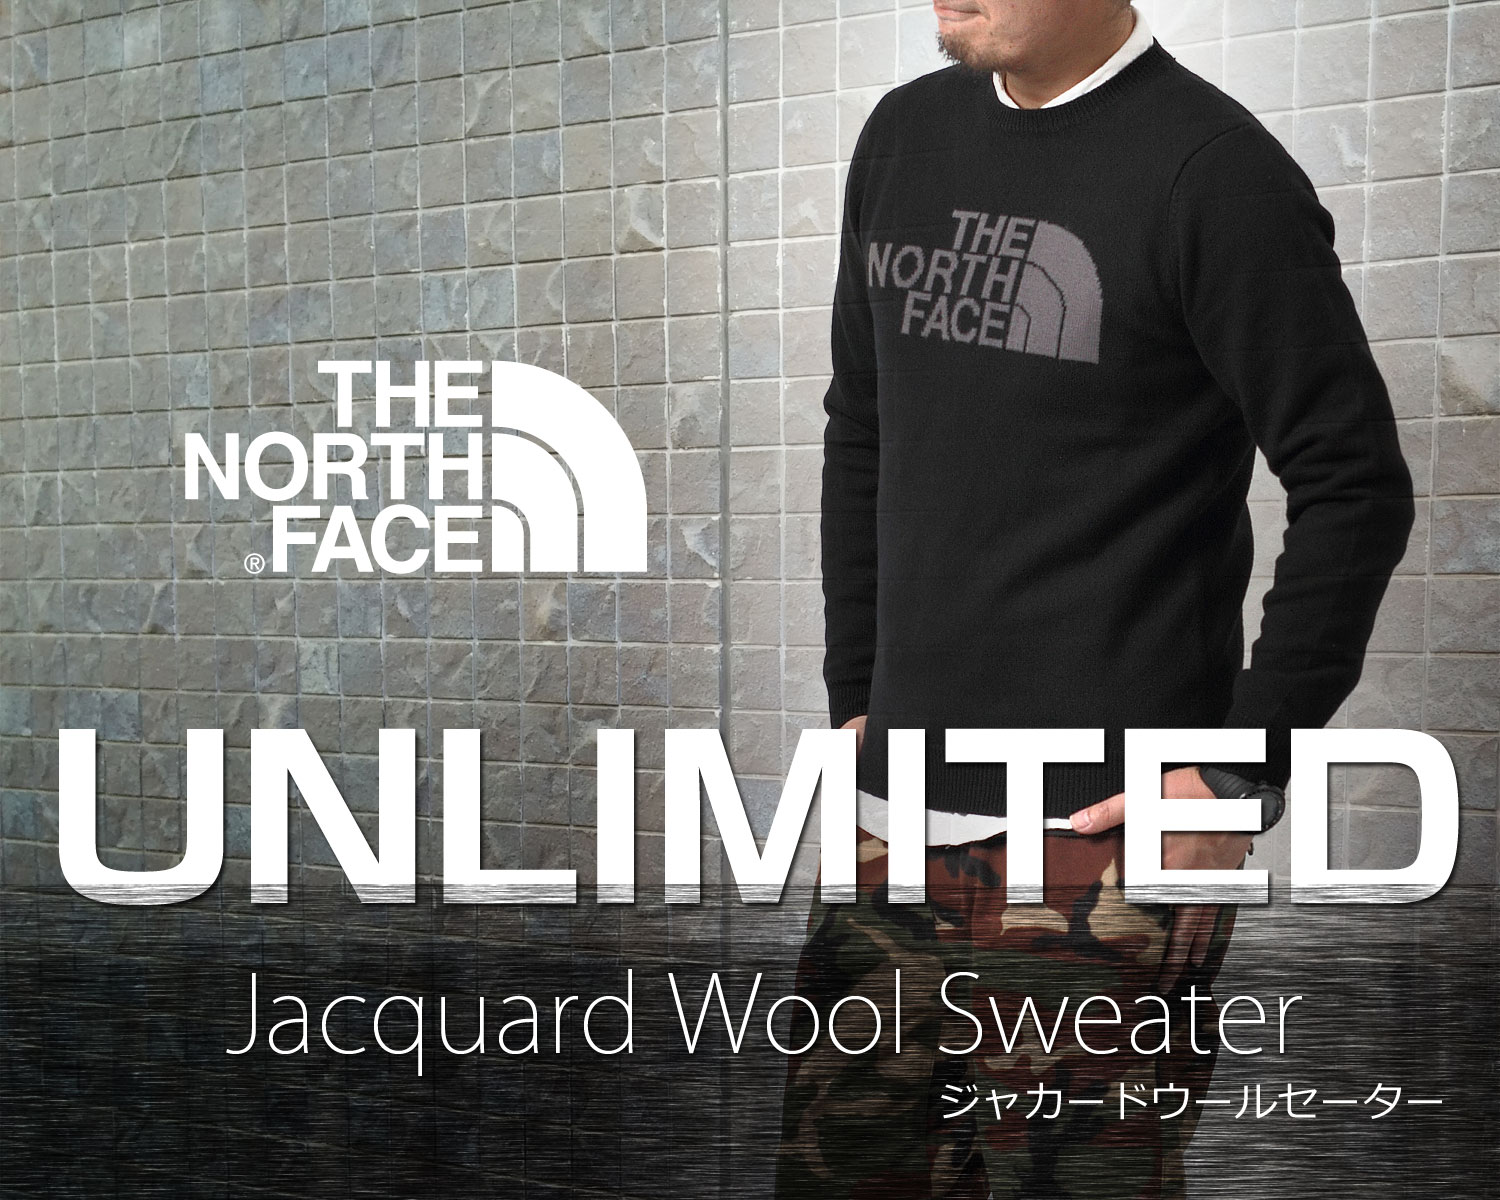 Jacquard Wool Sweater(ジャカードウールセーター) NT91551